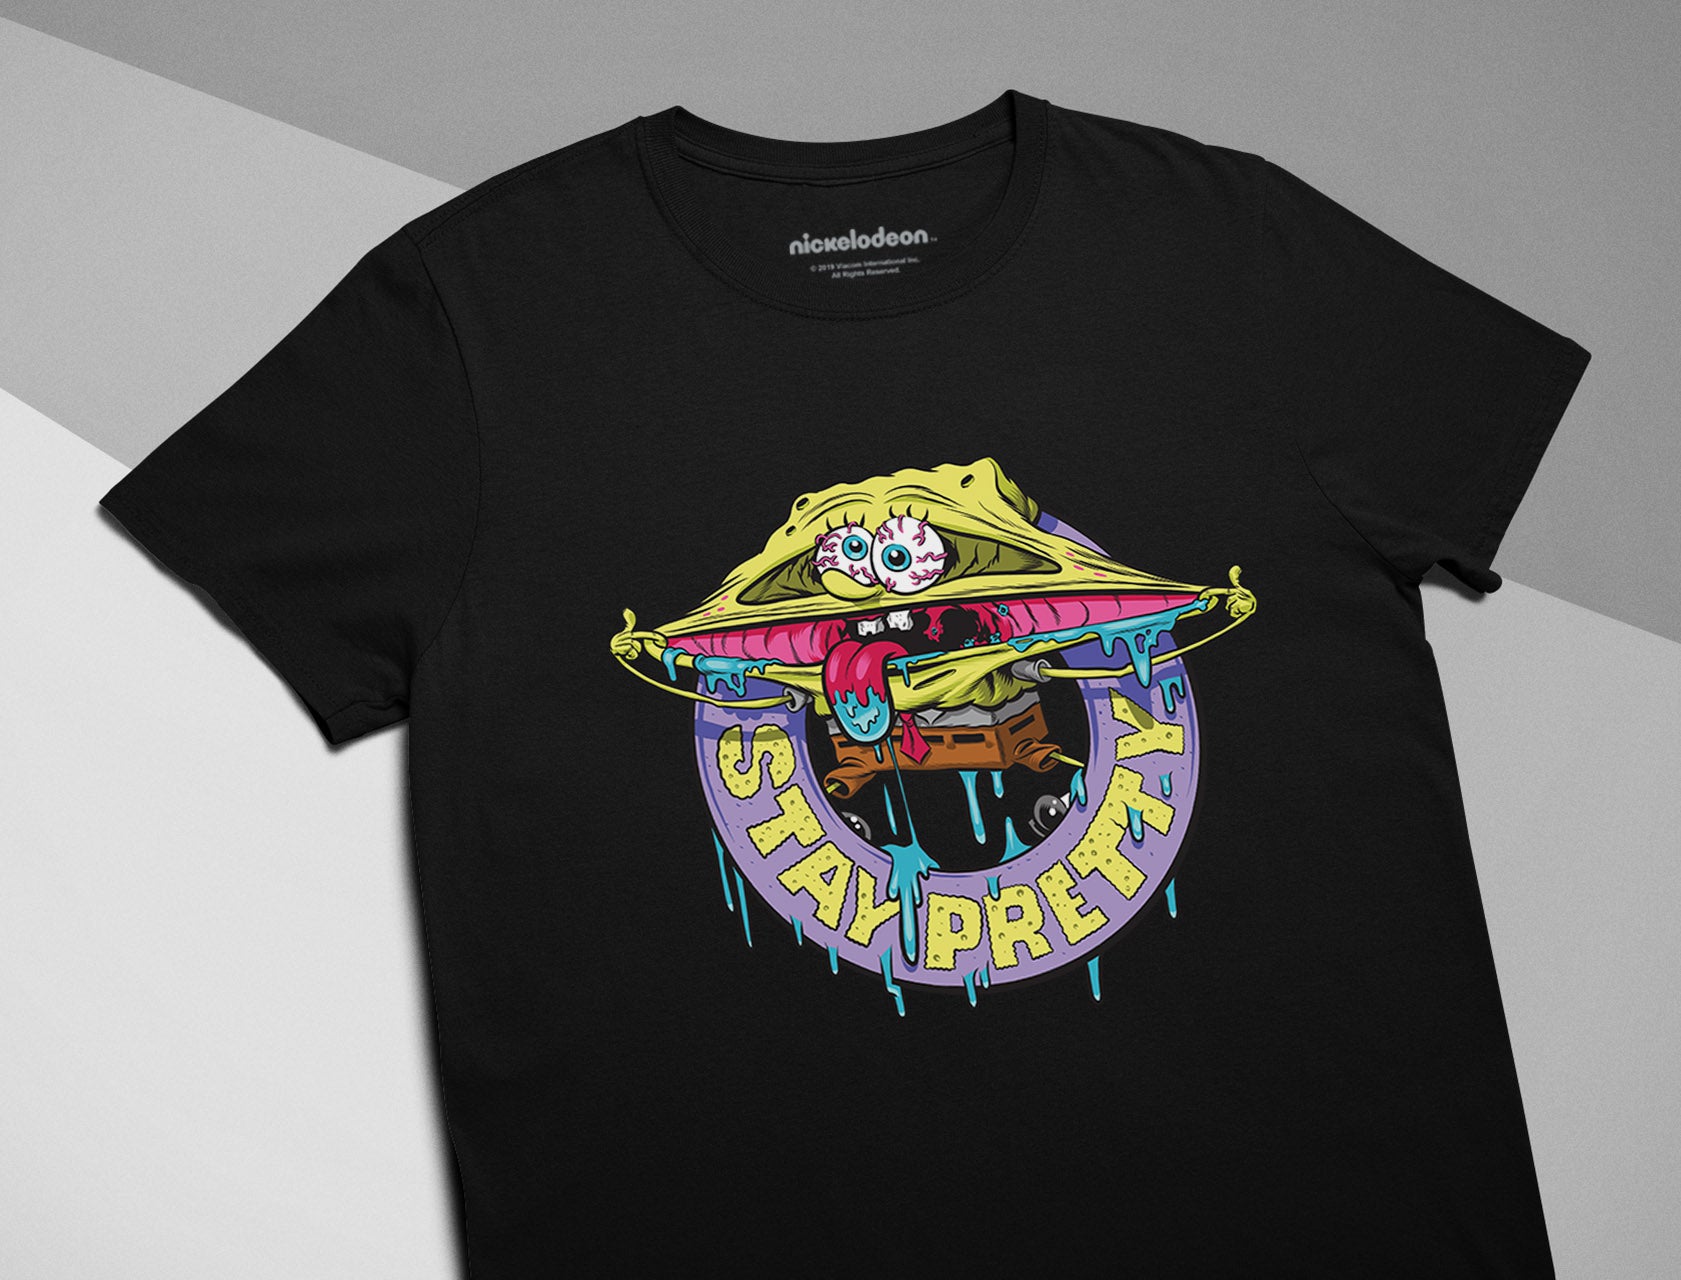 Nickelodeon Spongebob Squarepants Shirt Stay Pretty Funny Party T-Shirt - Heather Navy 8